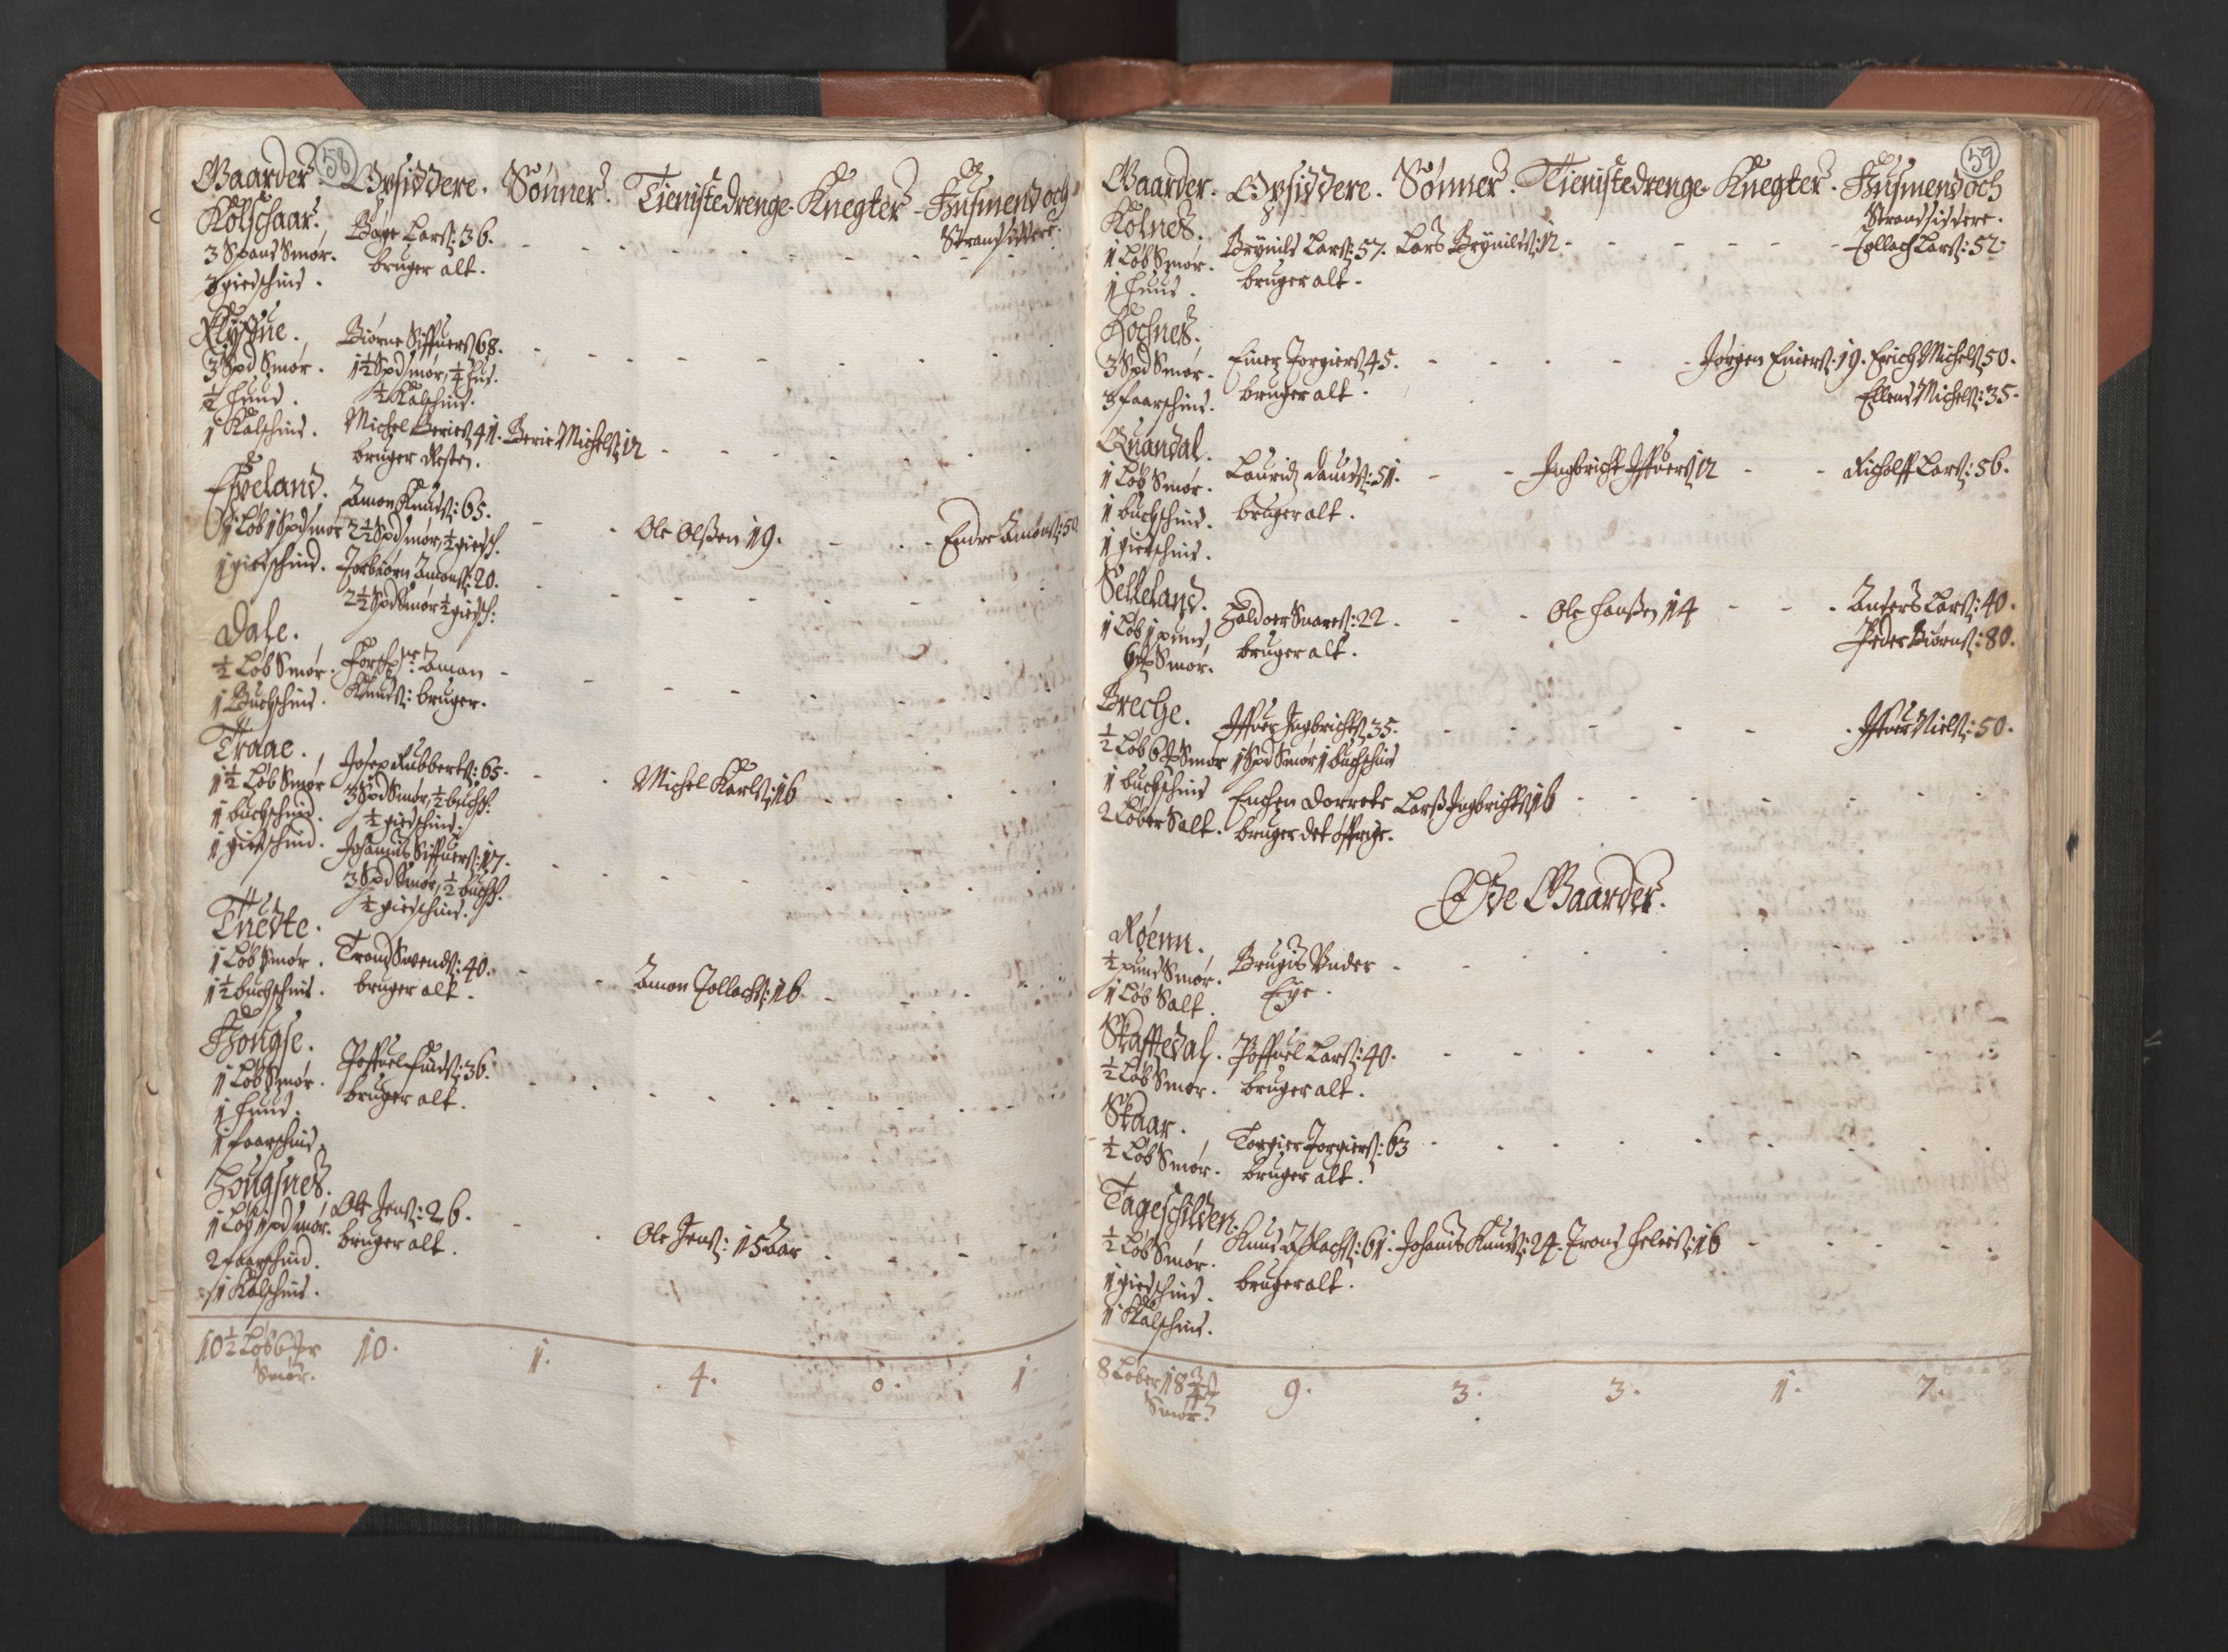 RA, Fogdenes og sorenskrivernes manntall 1664-1666, nr. 14: Hardanger len, Ytre Sogn fogderi og Indre Sogn fogderi, 1664-1665, s. 58-59